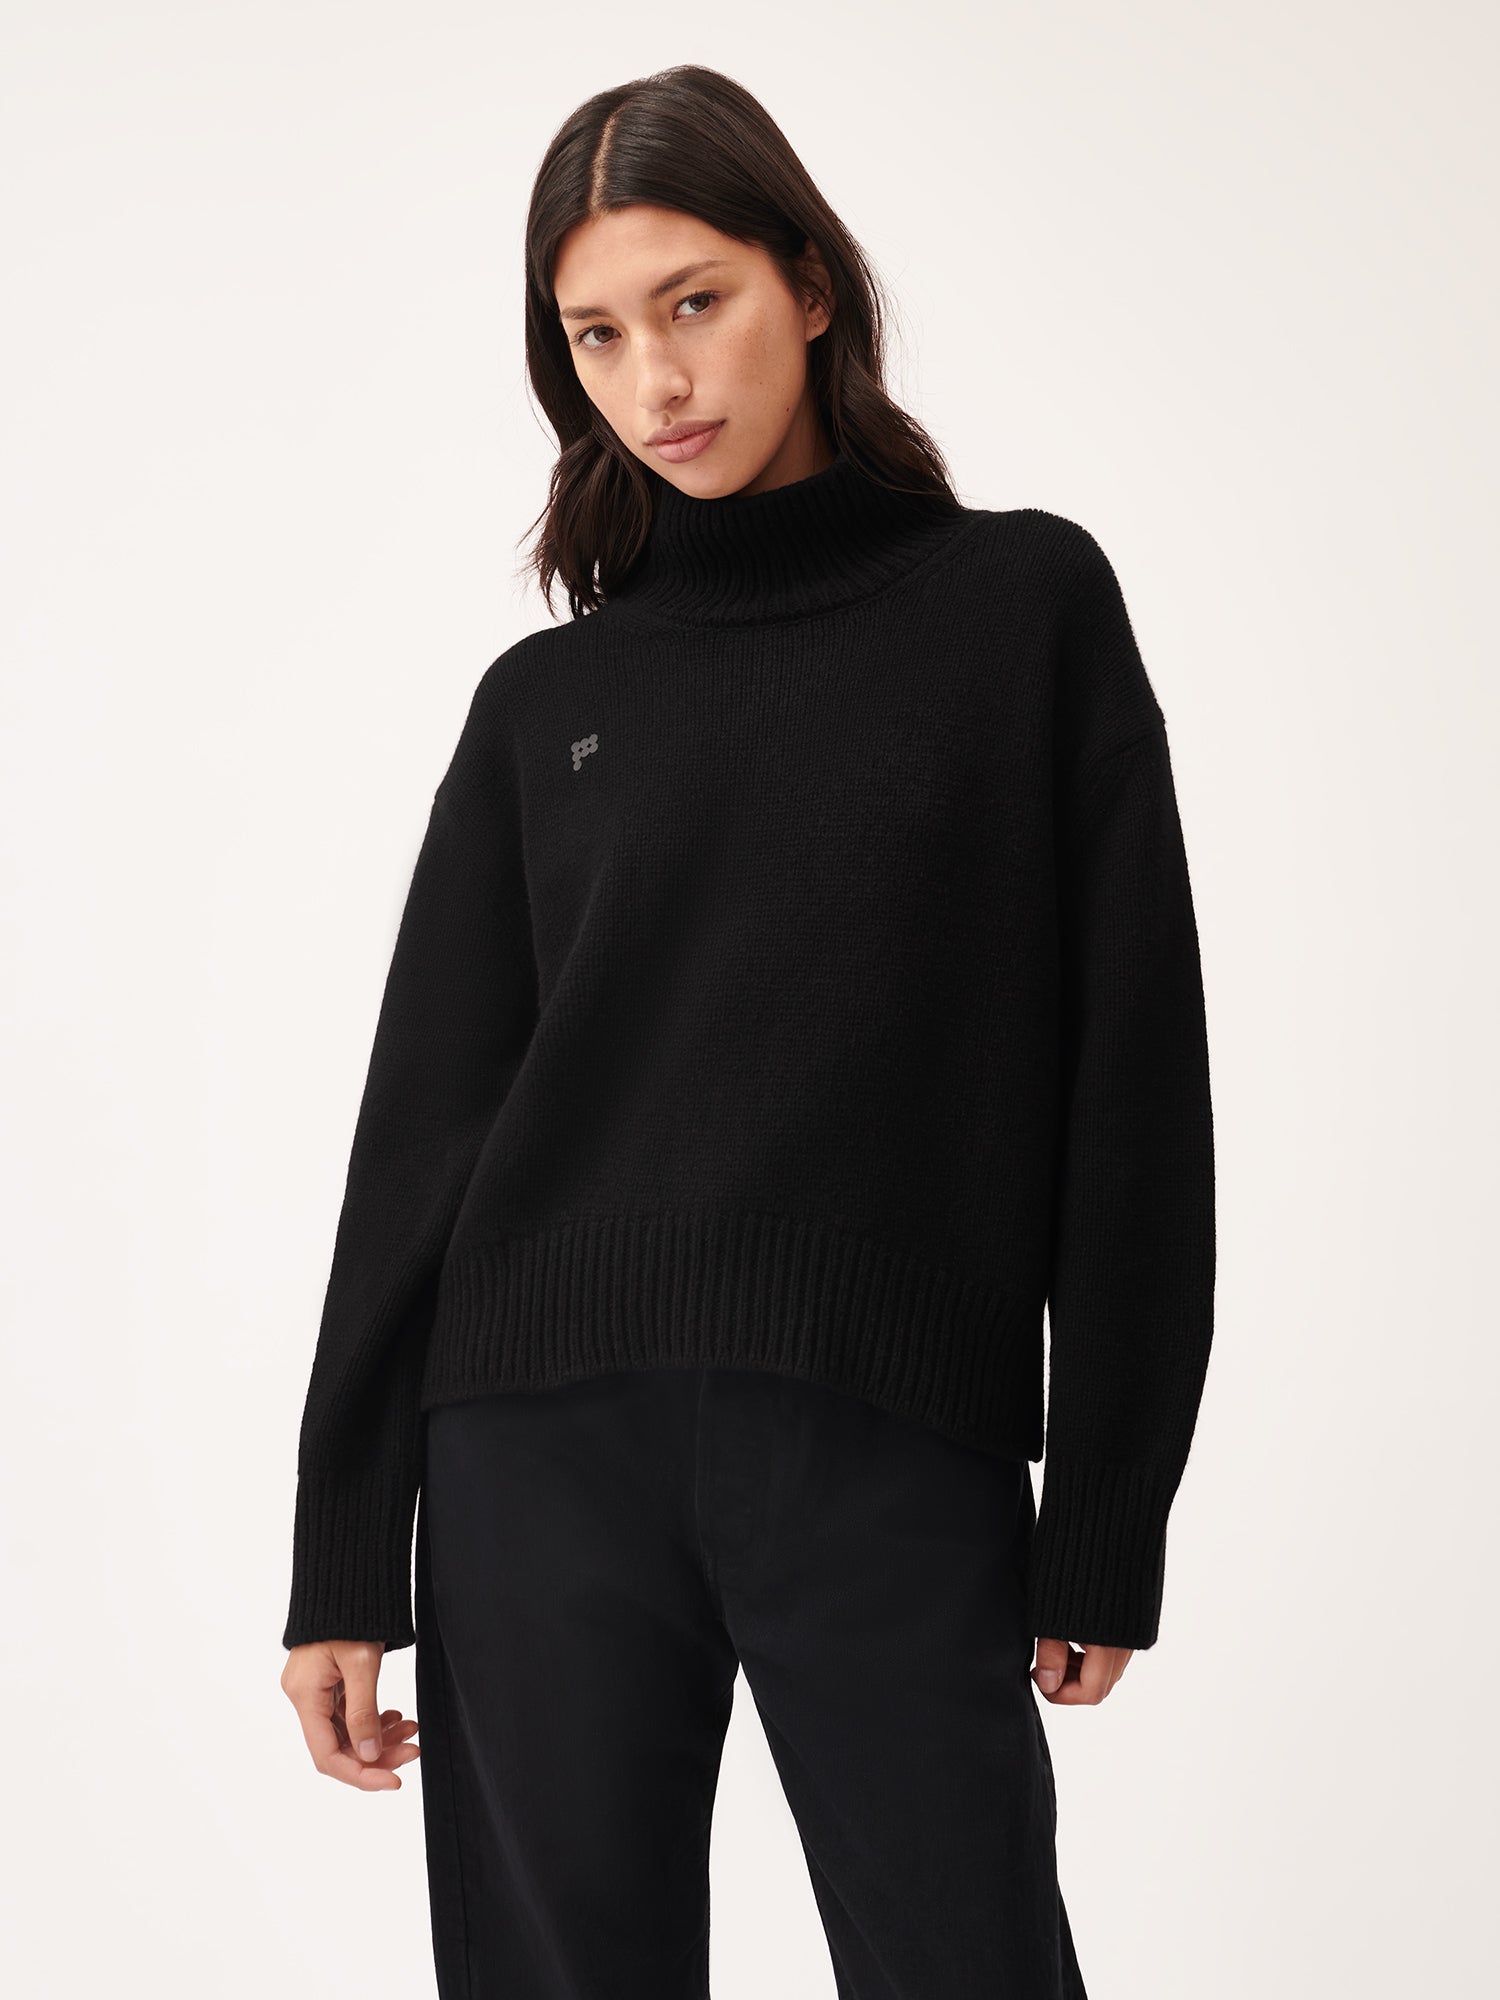 Women's Recycled Cashmere Turtleneck Sweater - Black - Pangaia